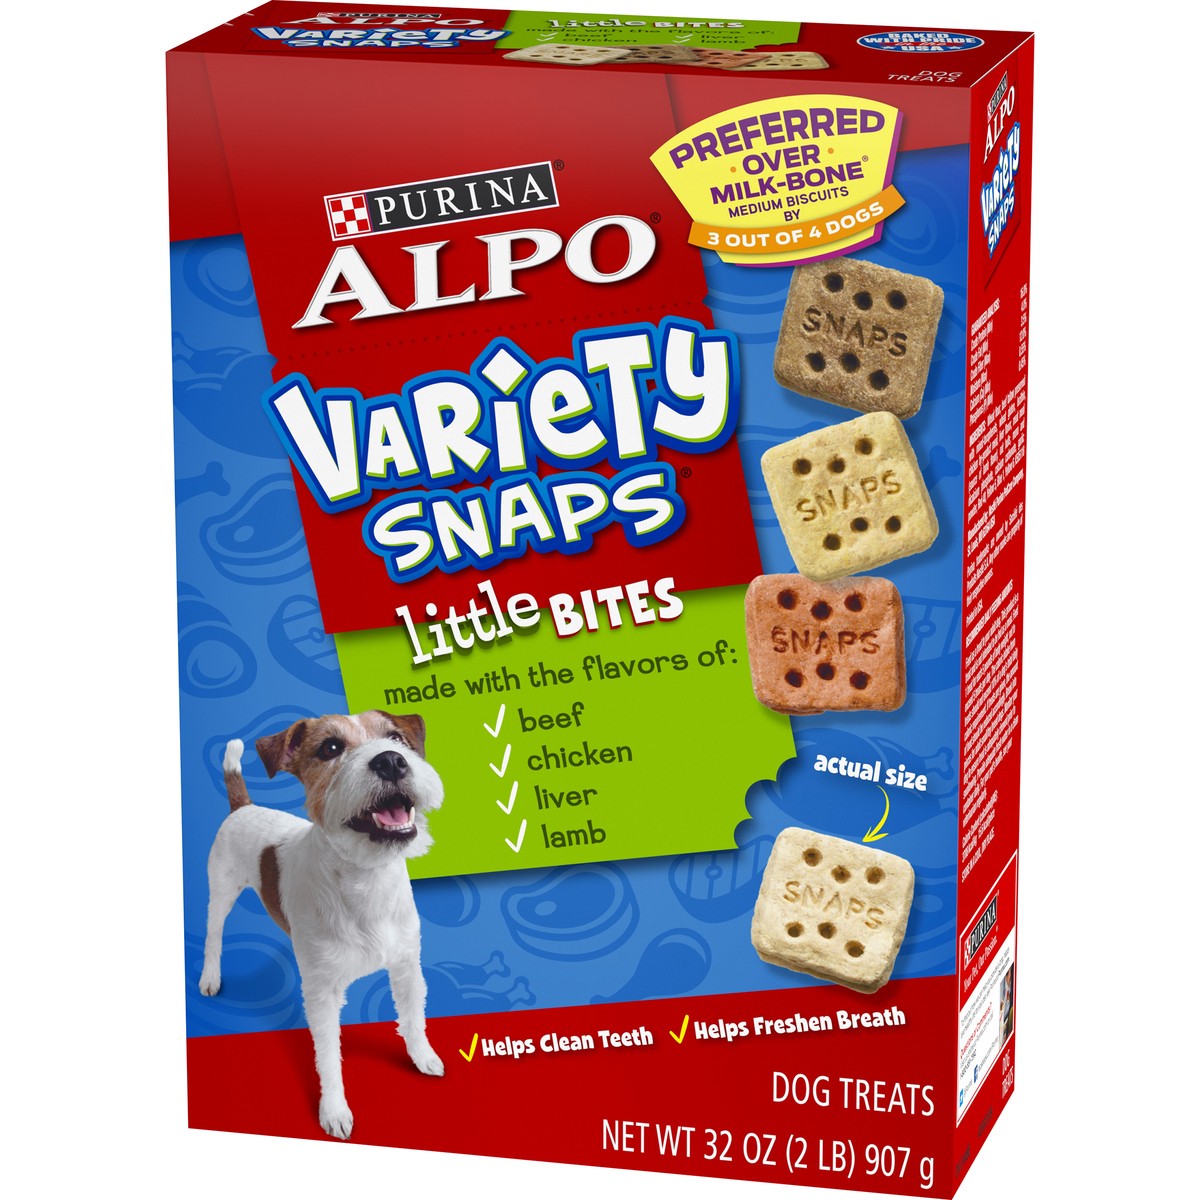 slide 3 of 9, ALPO Purina ALPO Dog Treats, Variety Snaps Little Bites Beef, Chicken, Liver, Lamb - 32 oz. Box, 32 oz